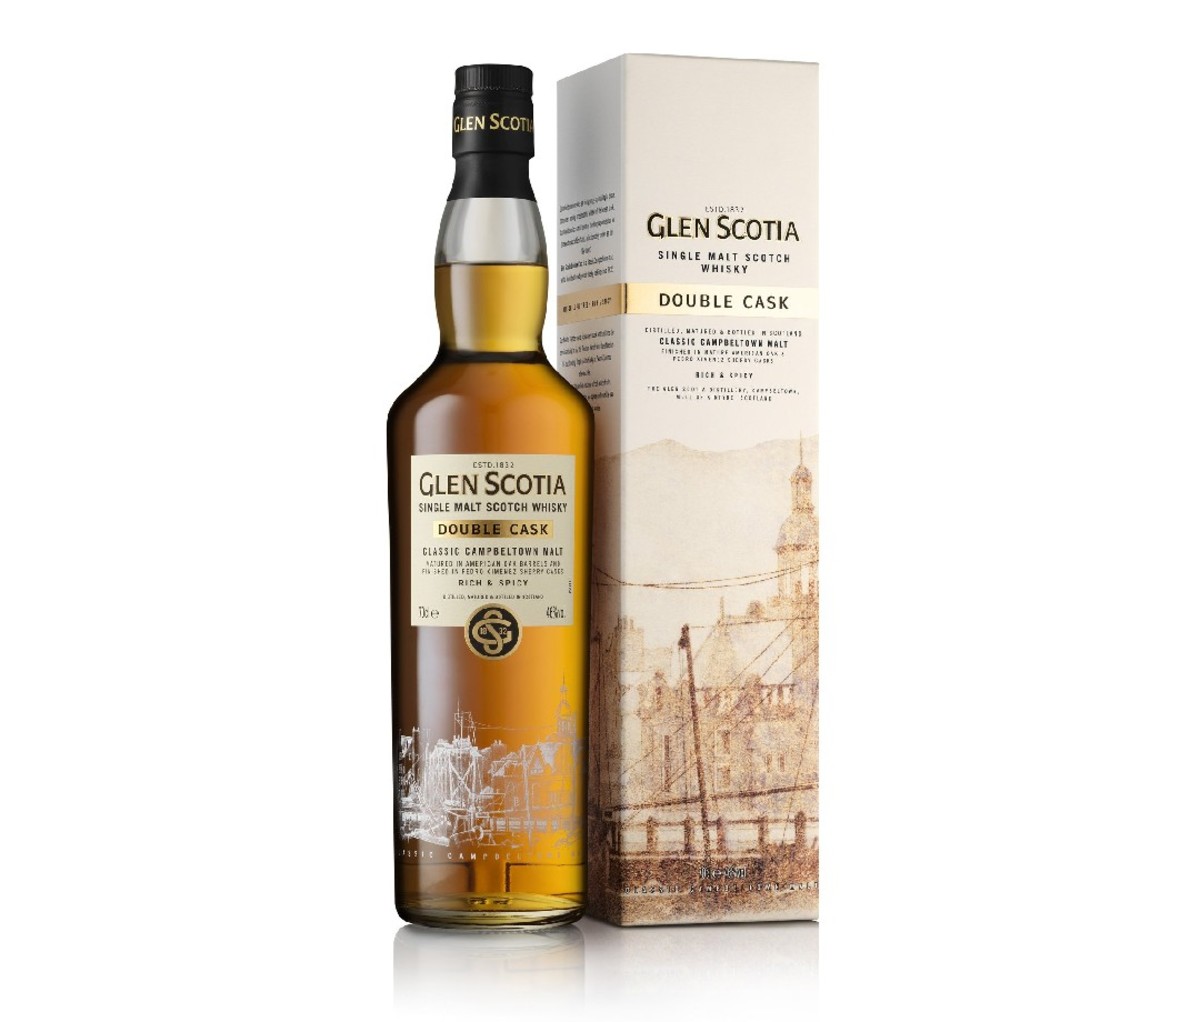 A bottle of Glen Scotia Double Cask whisky.